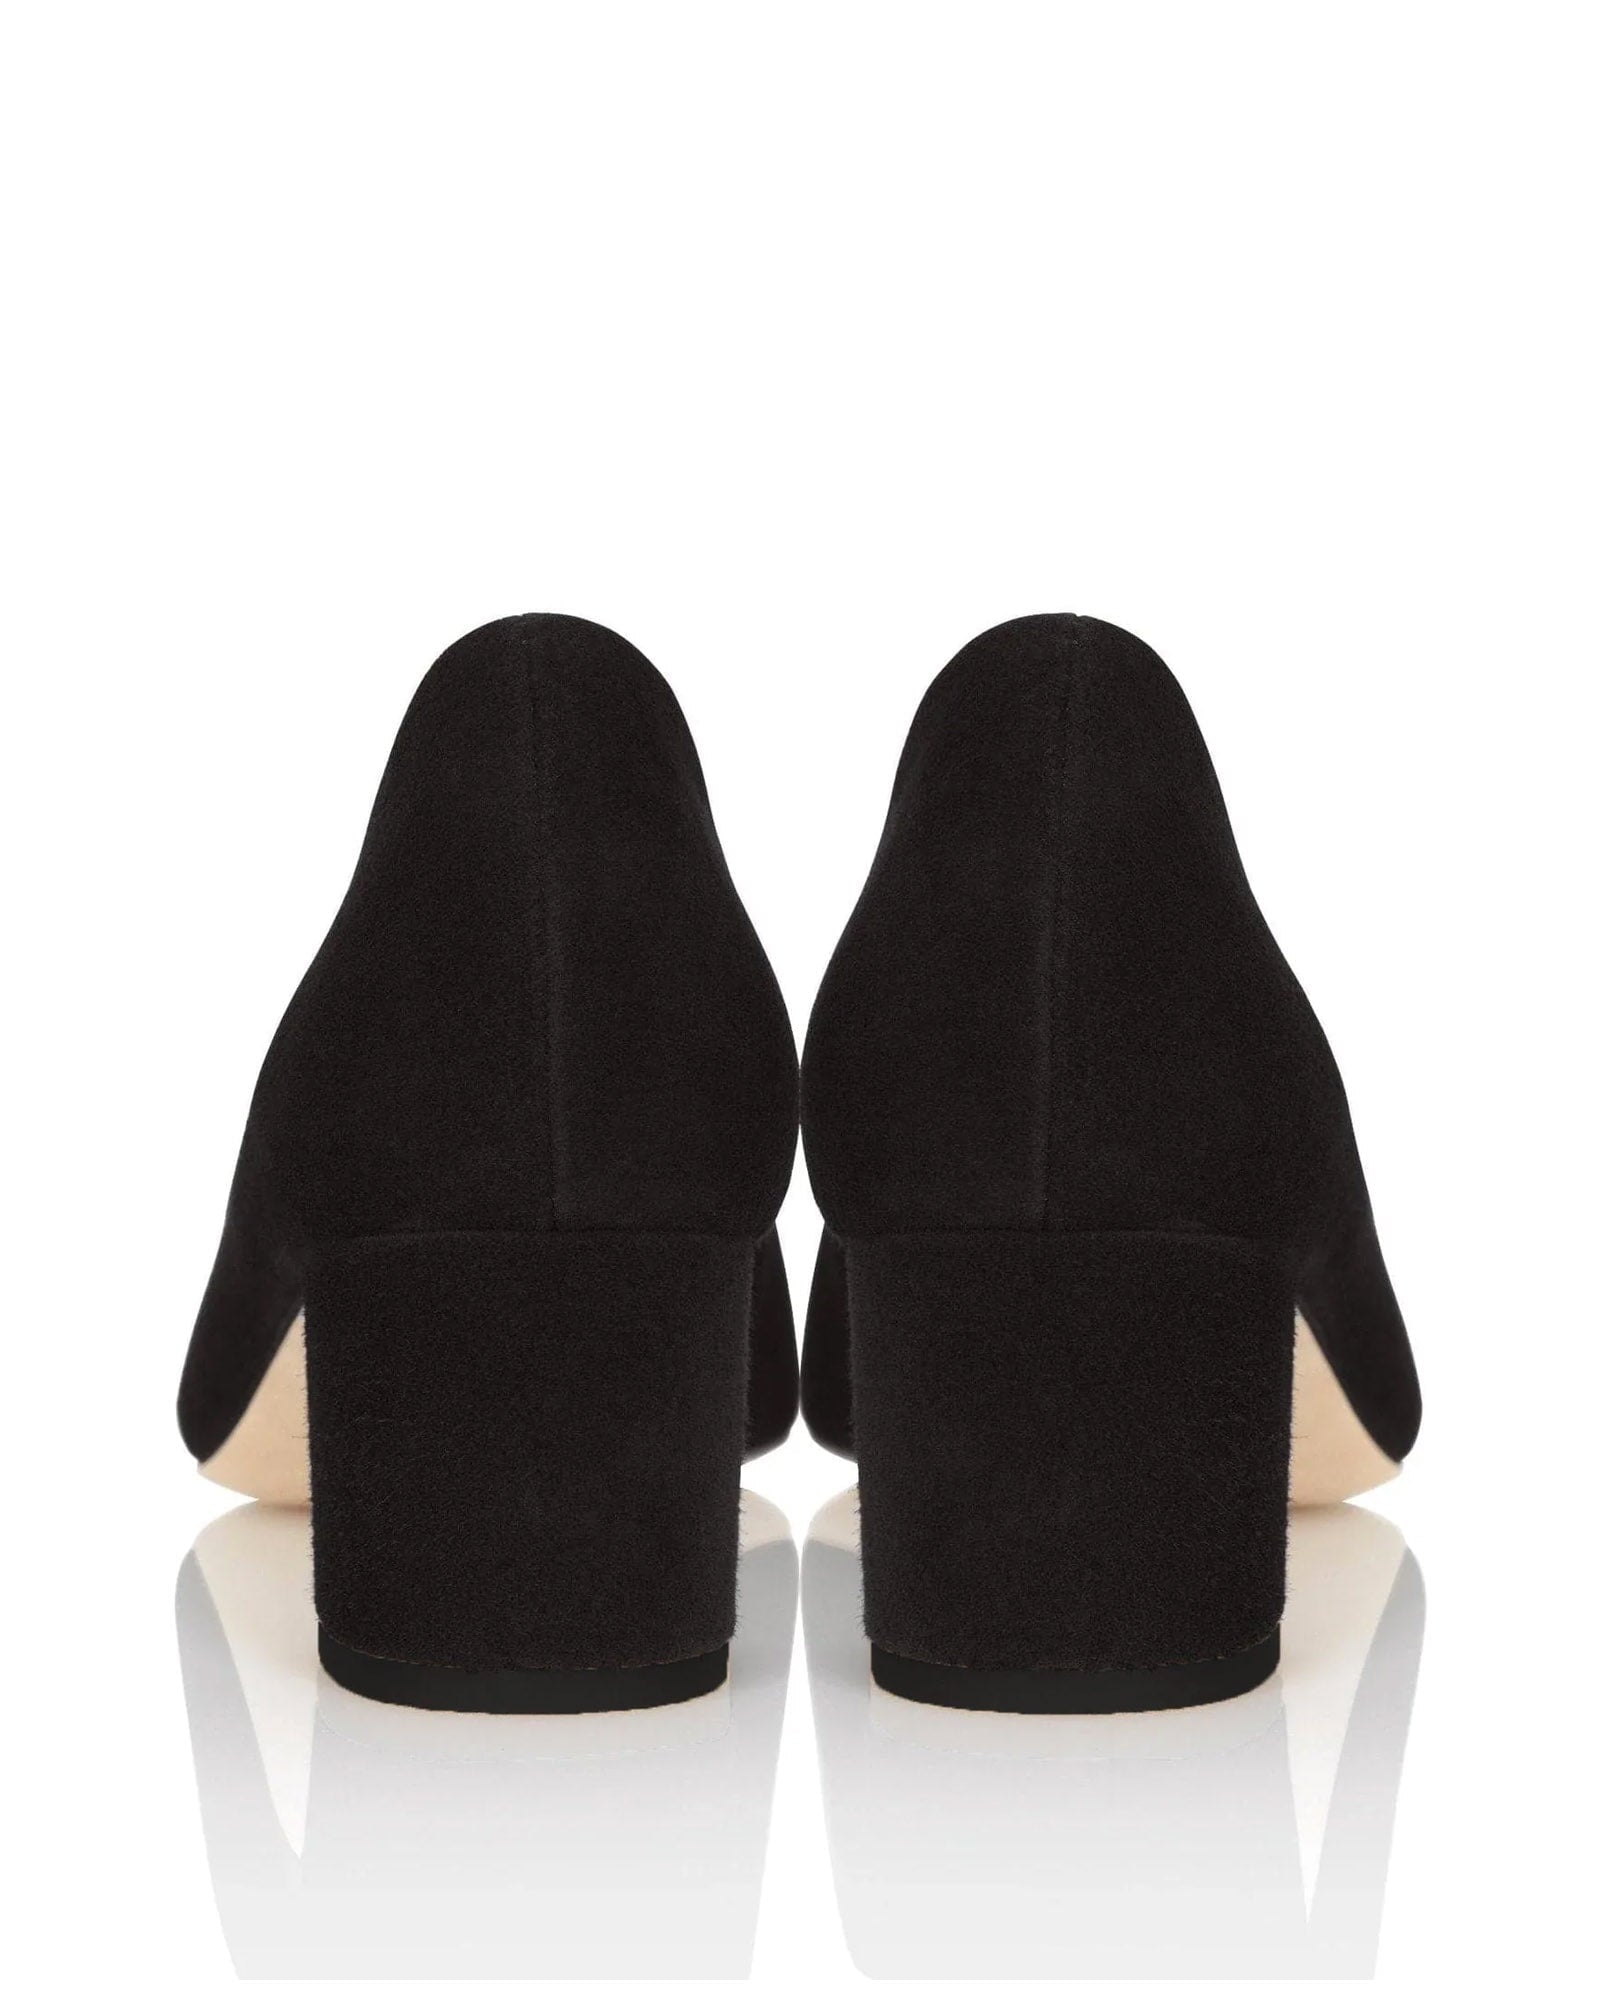 Mia Kitten Jet Black Fashion Shoe Block Heel Black Court Shoe  image